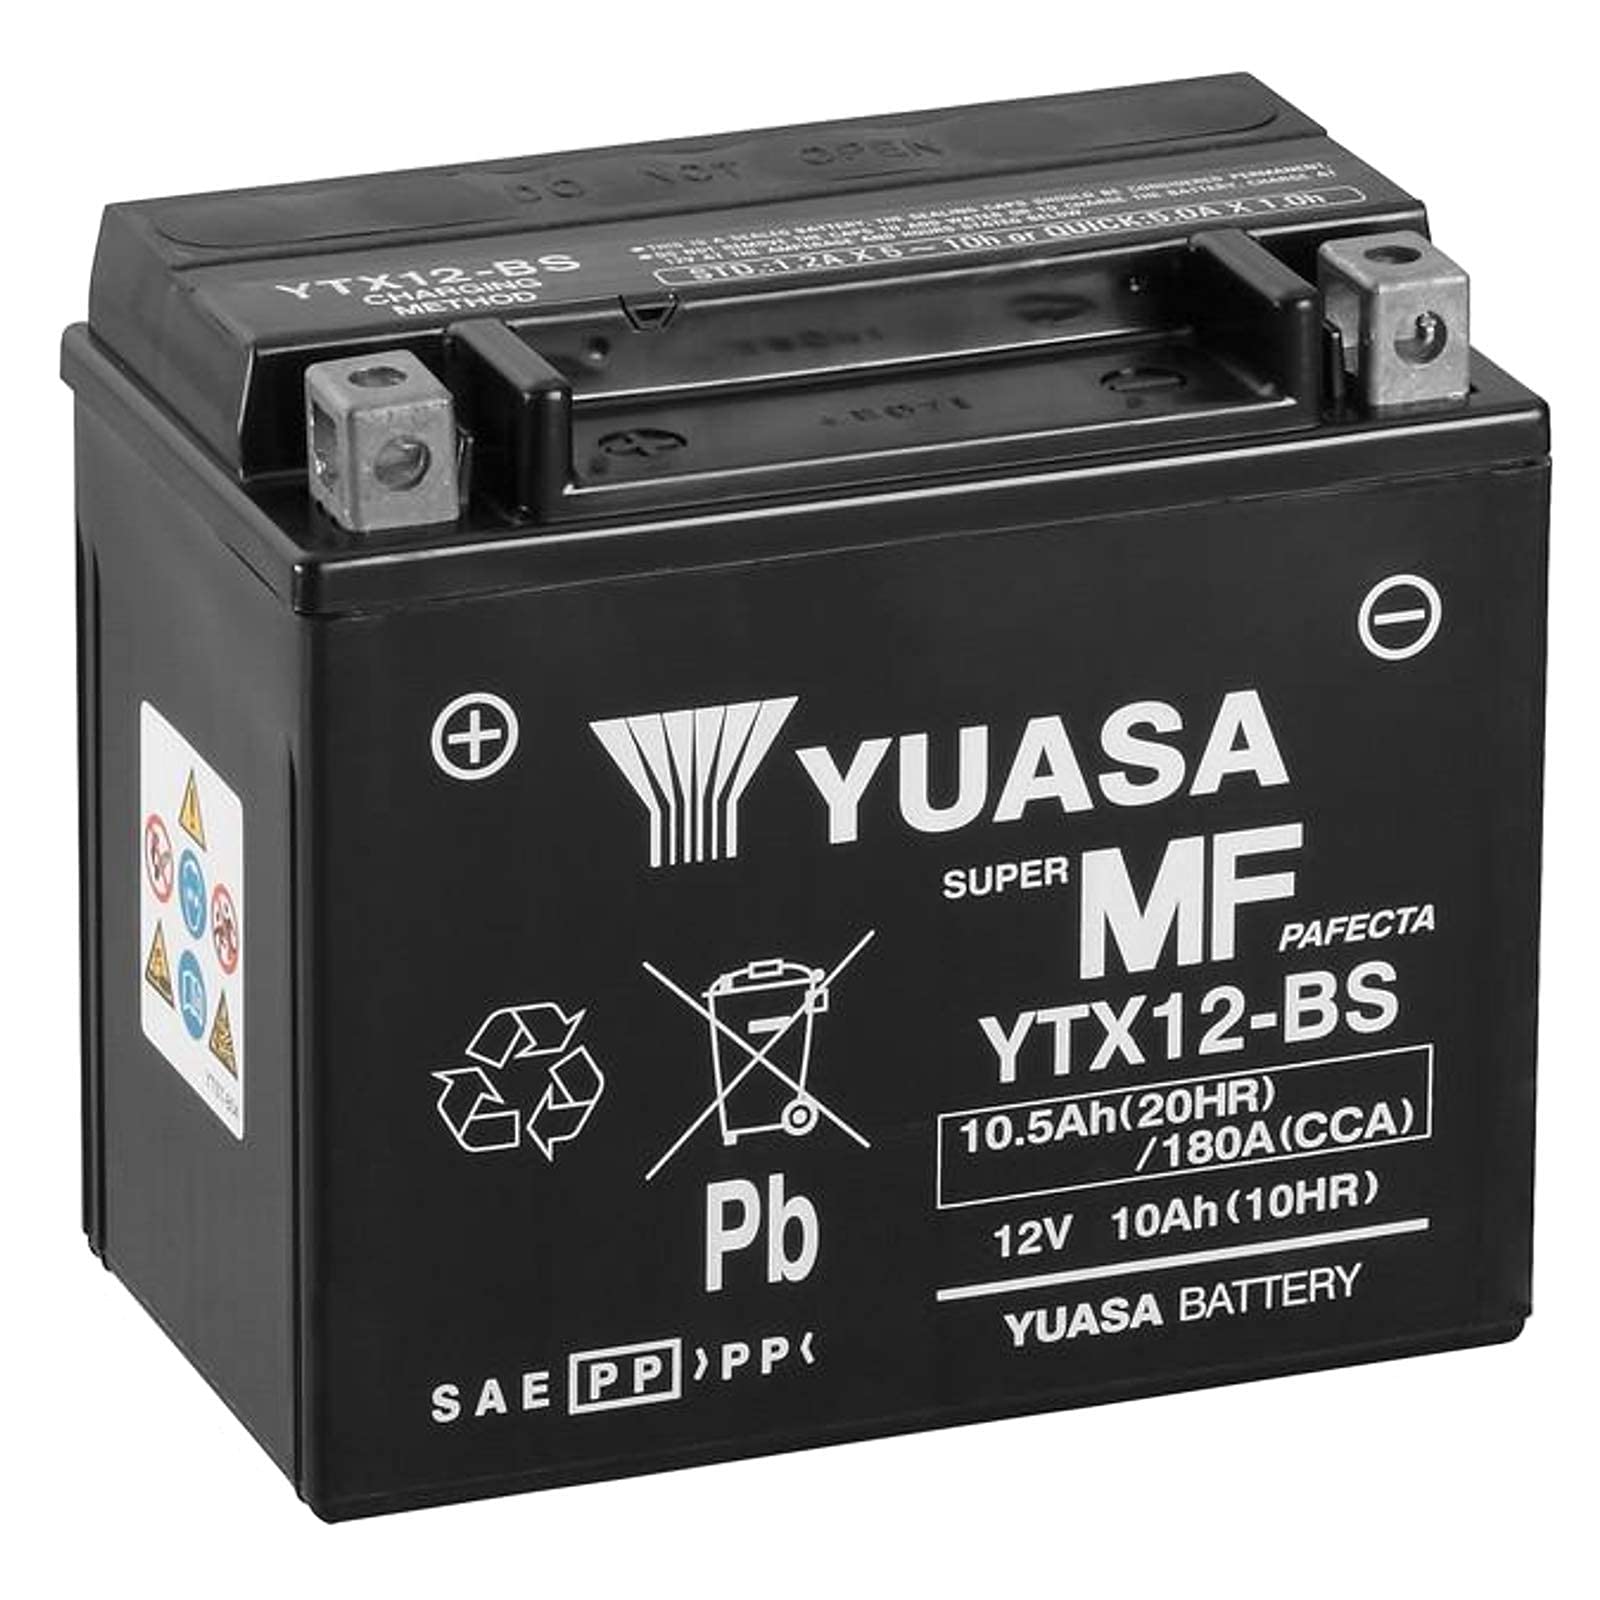 Motorradbatterie Yuasa YTX12-BS - Wartungsfrei - 12 V 10 Ah - Maße: 150 x 87 x 131 mm kompatibel mit Piaggio Nexus 125 von Yuasa